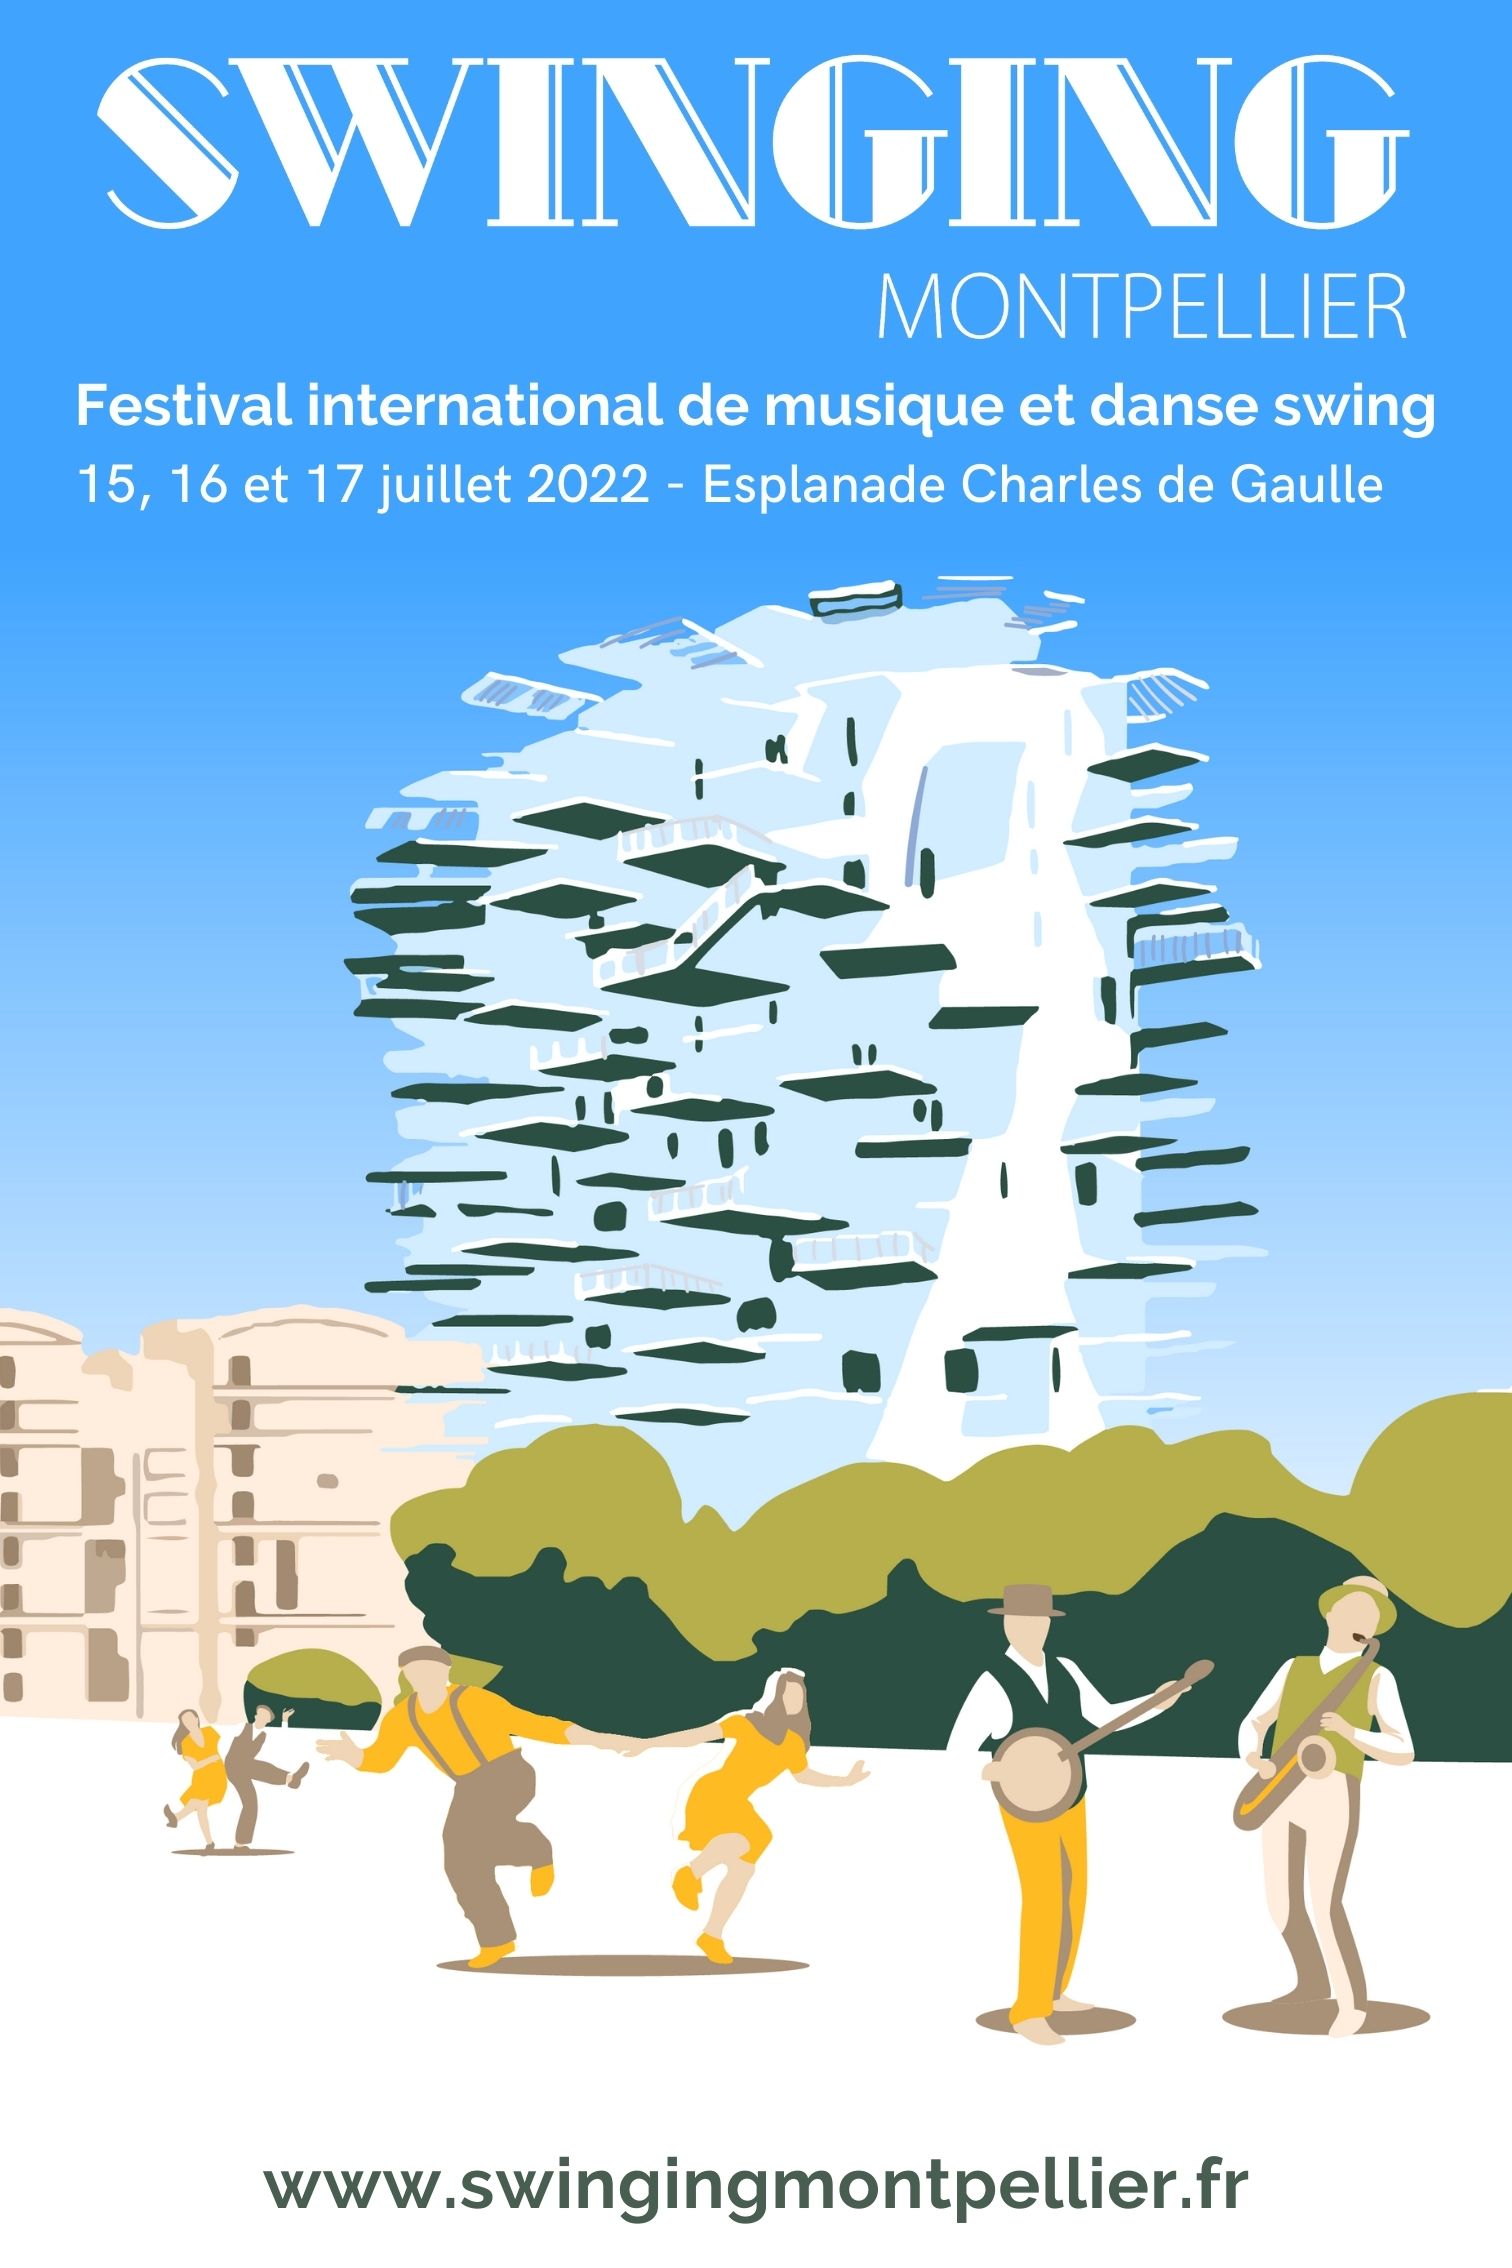 Swinging Montpellier 22 Festival international de musique et danse Swing